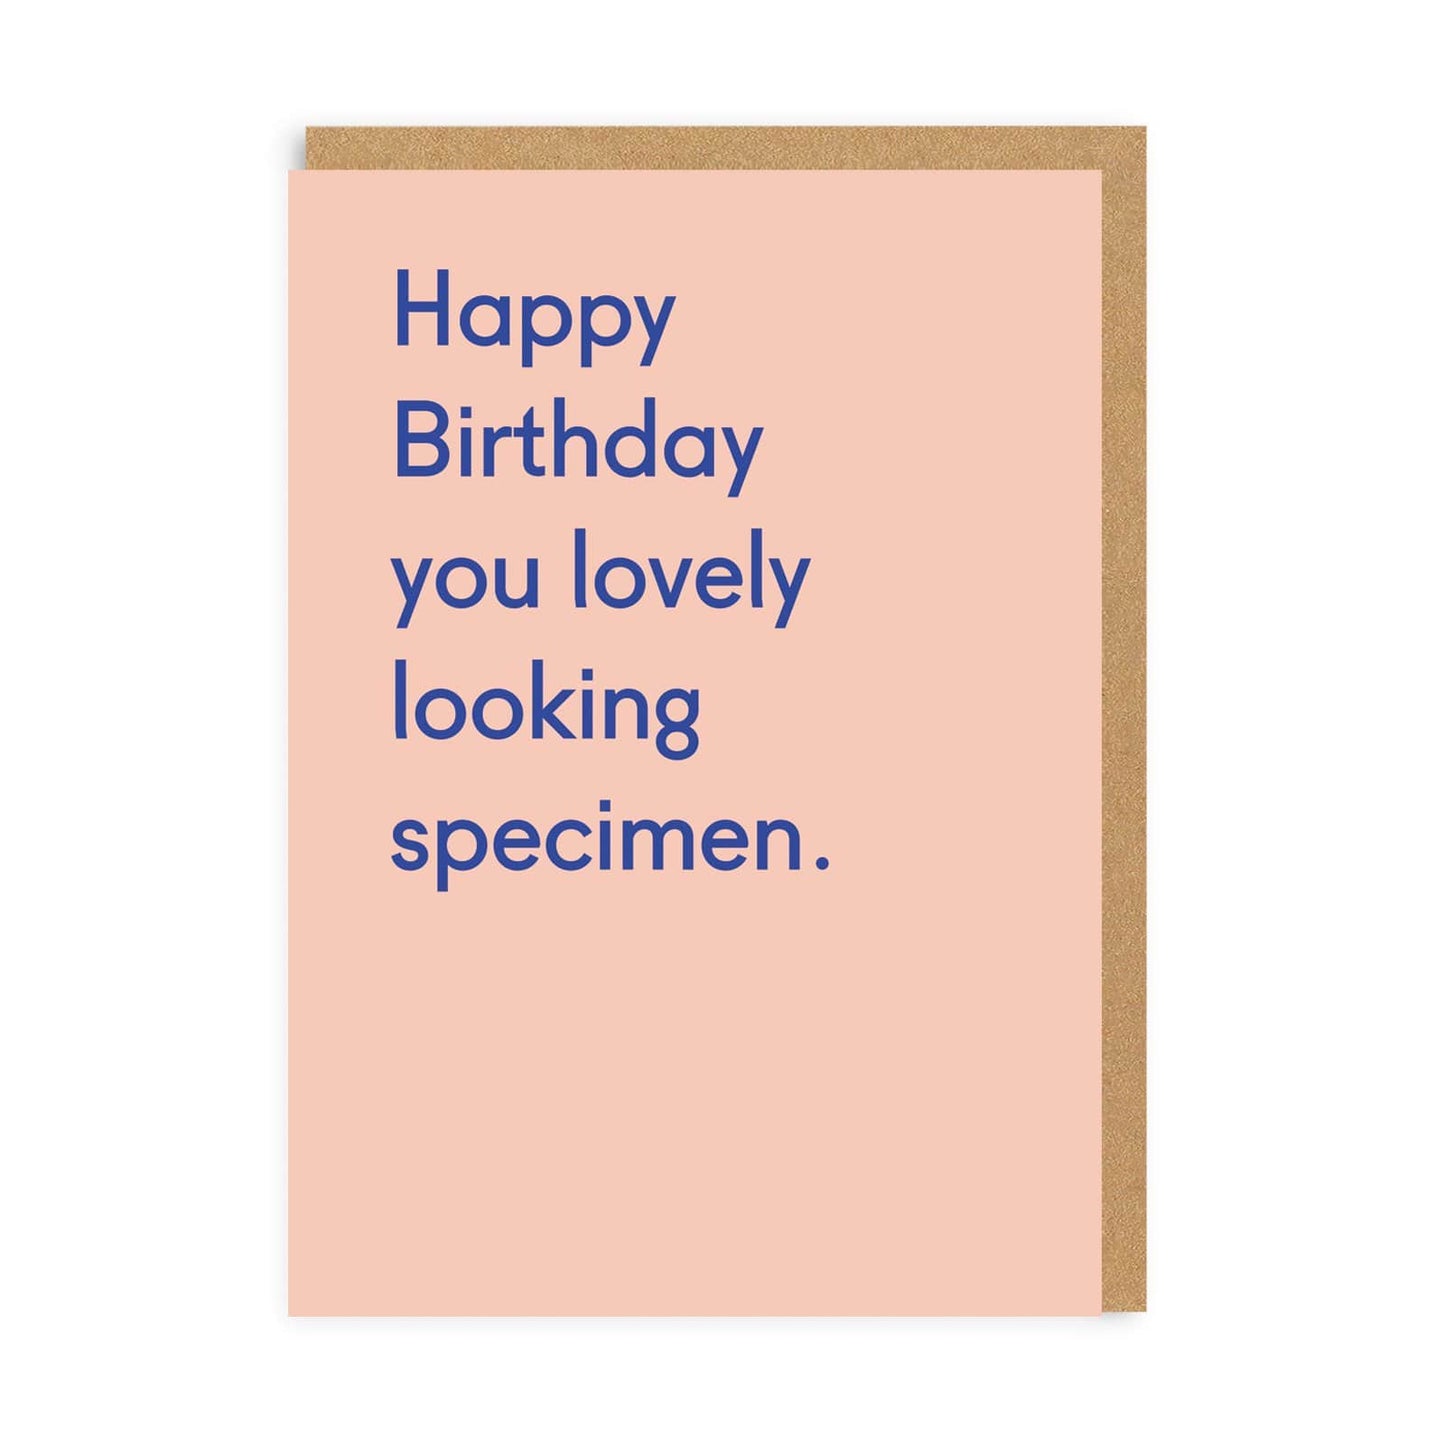 Lovely Looking Specimen Birthday Card